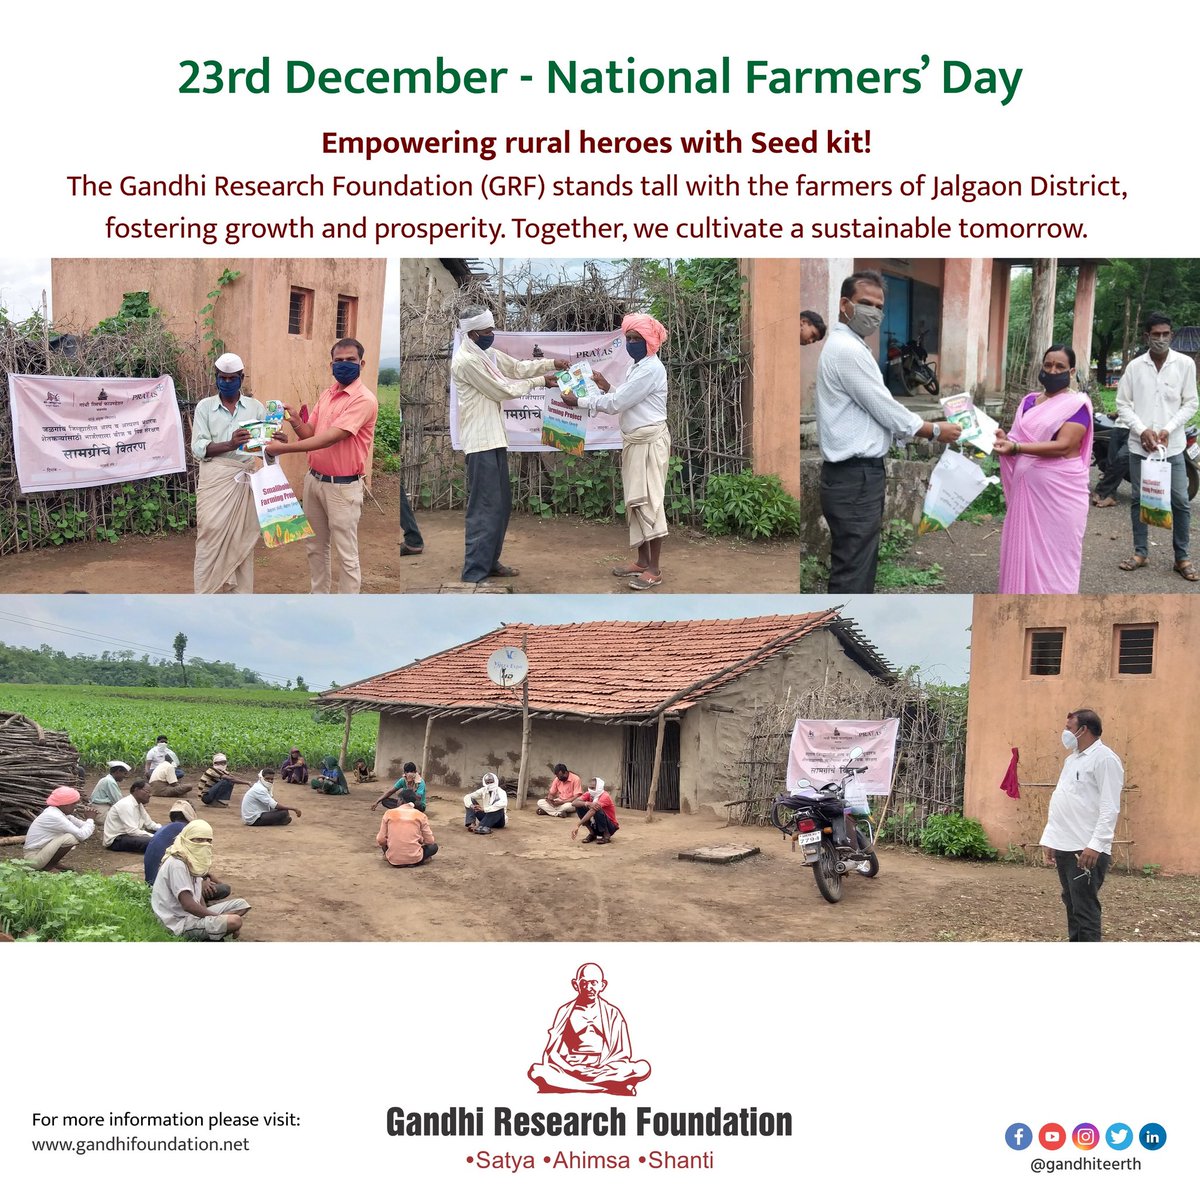 #nationalfarmersday #gandhiteerth #gandhiresearchfoundation #empoweringruralheros #ruralheros